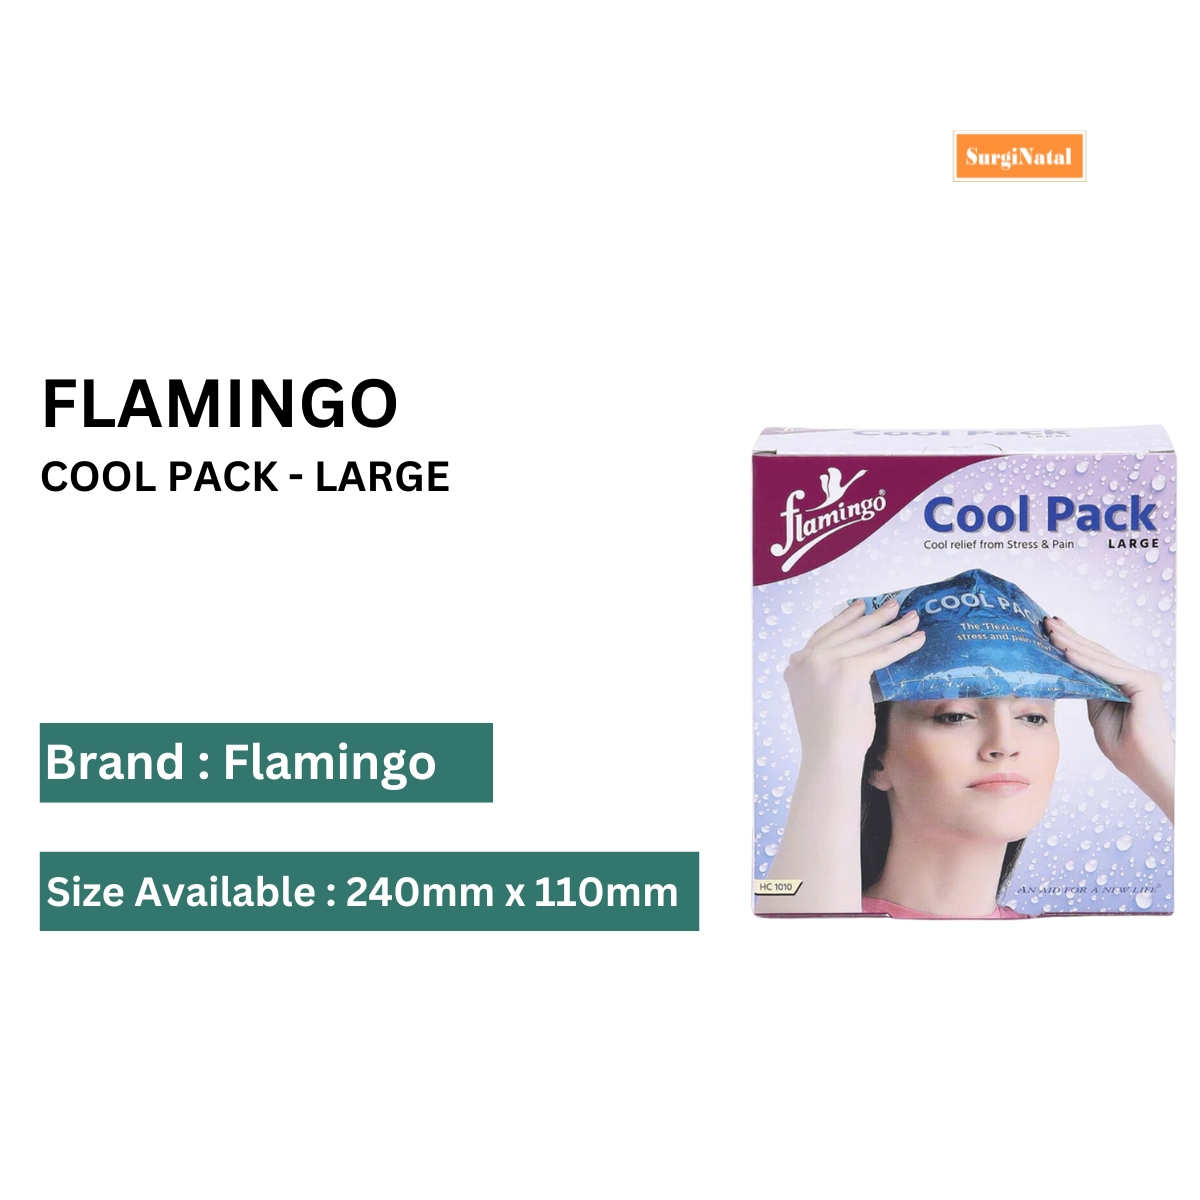 flamingo cool pack - large